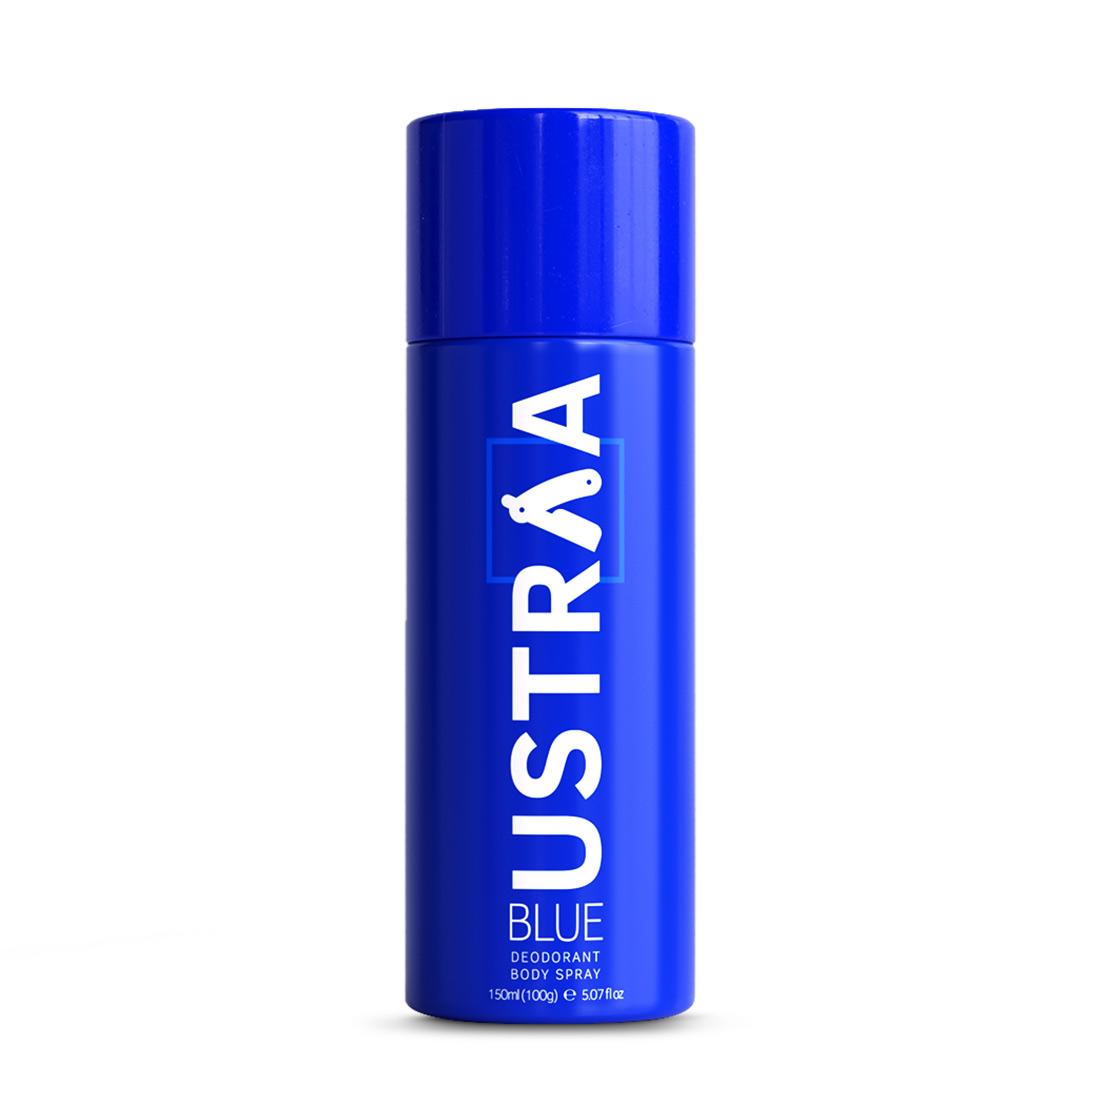 Ustraa Blue Deodorant Body Spray for Men: Unleash Freshness and Confidence